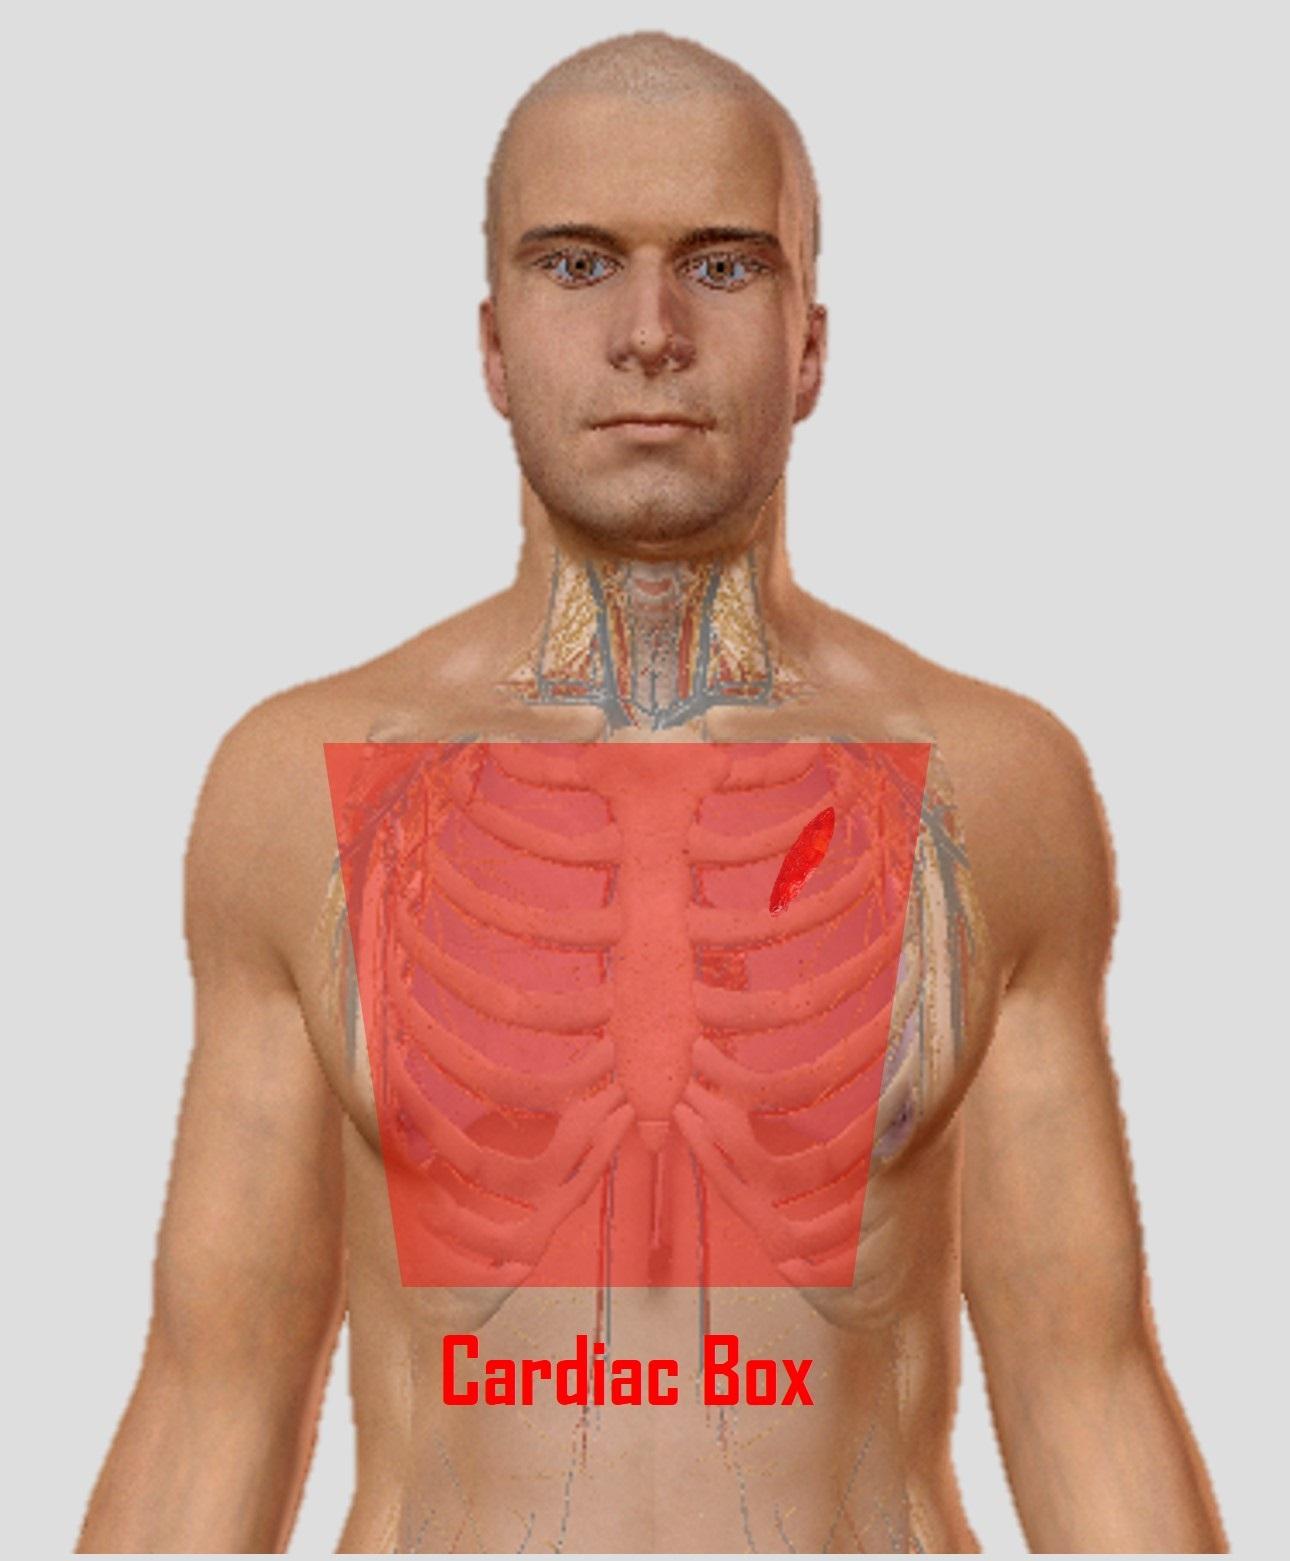 Cardiac box 1